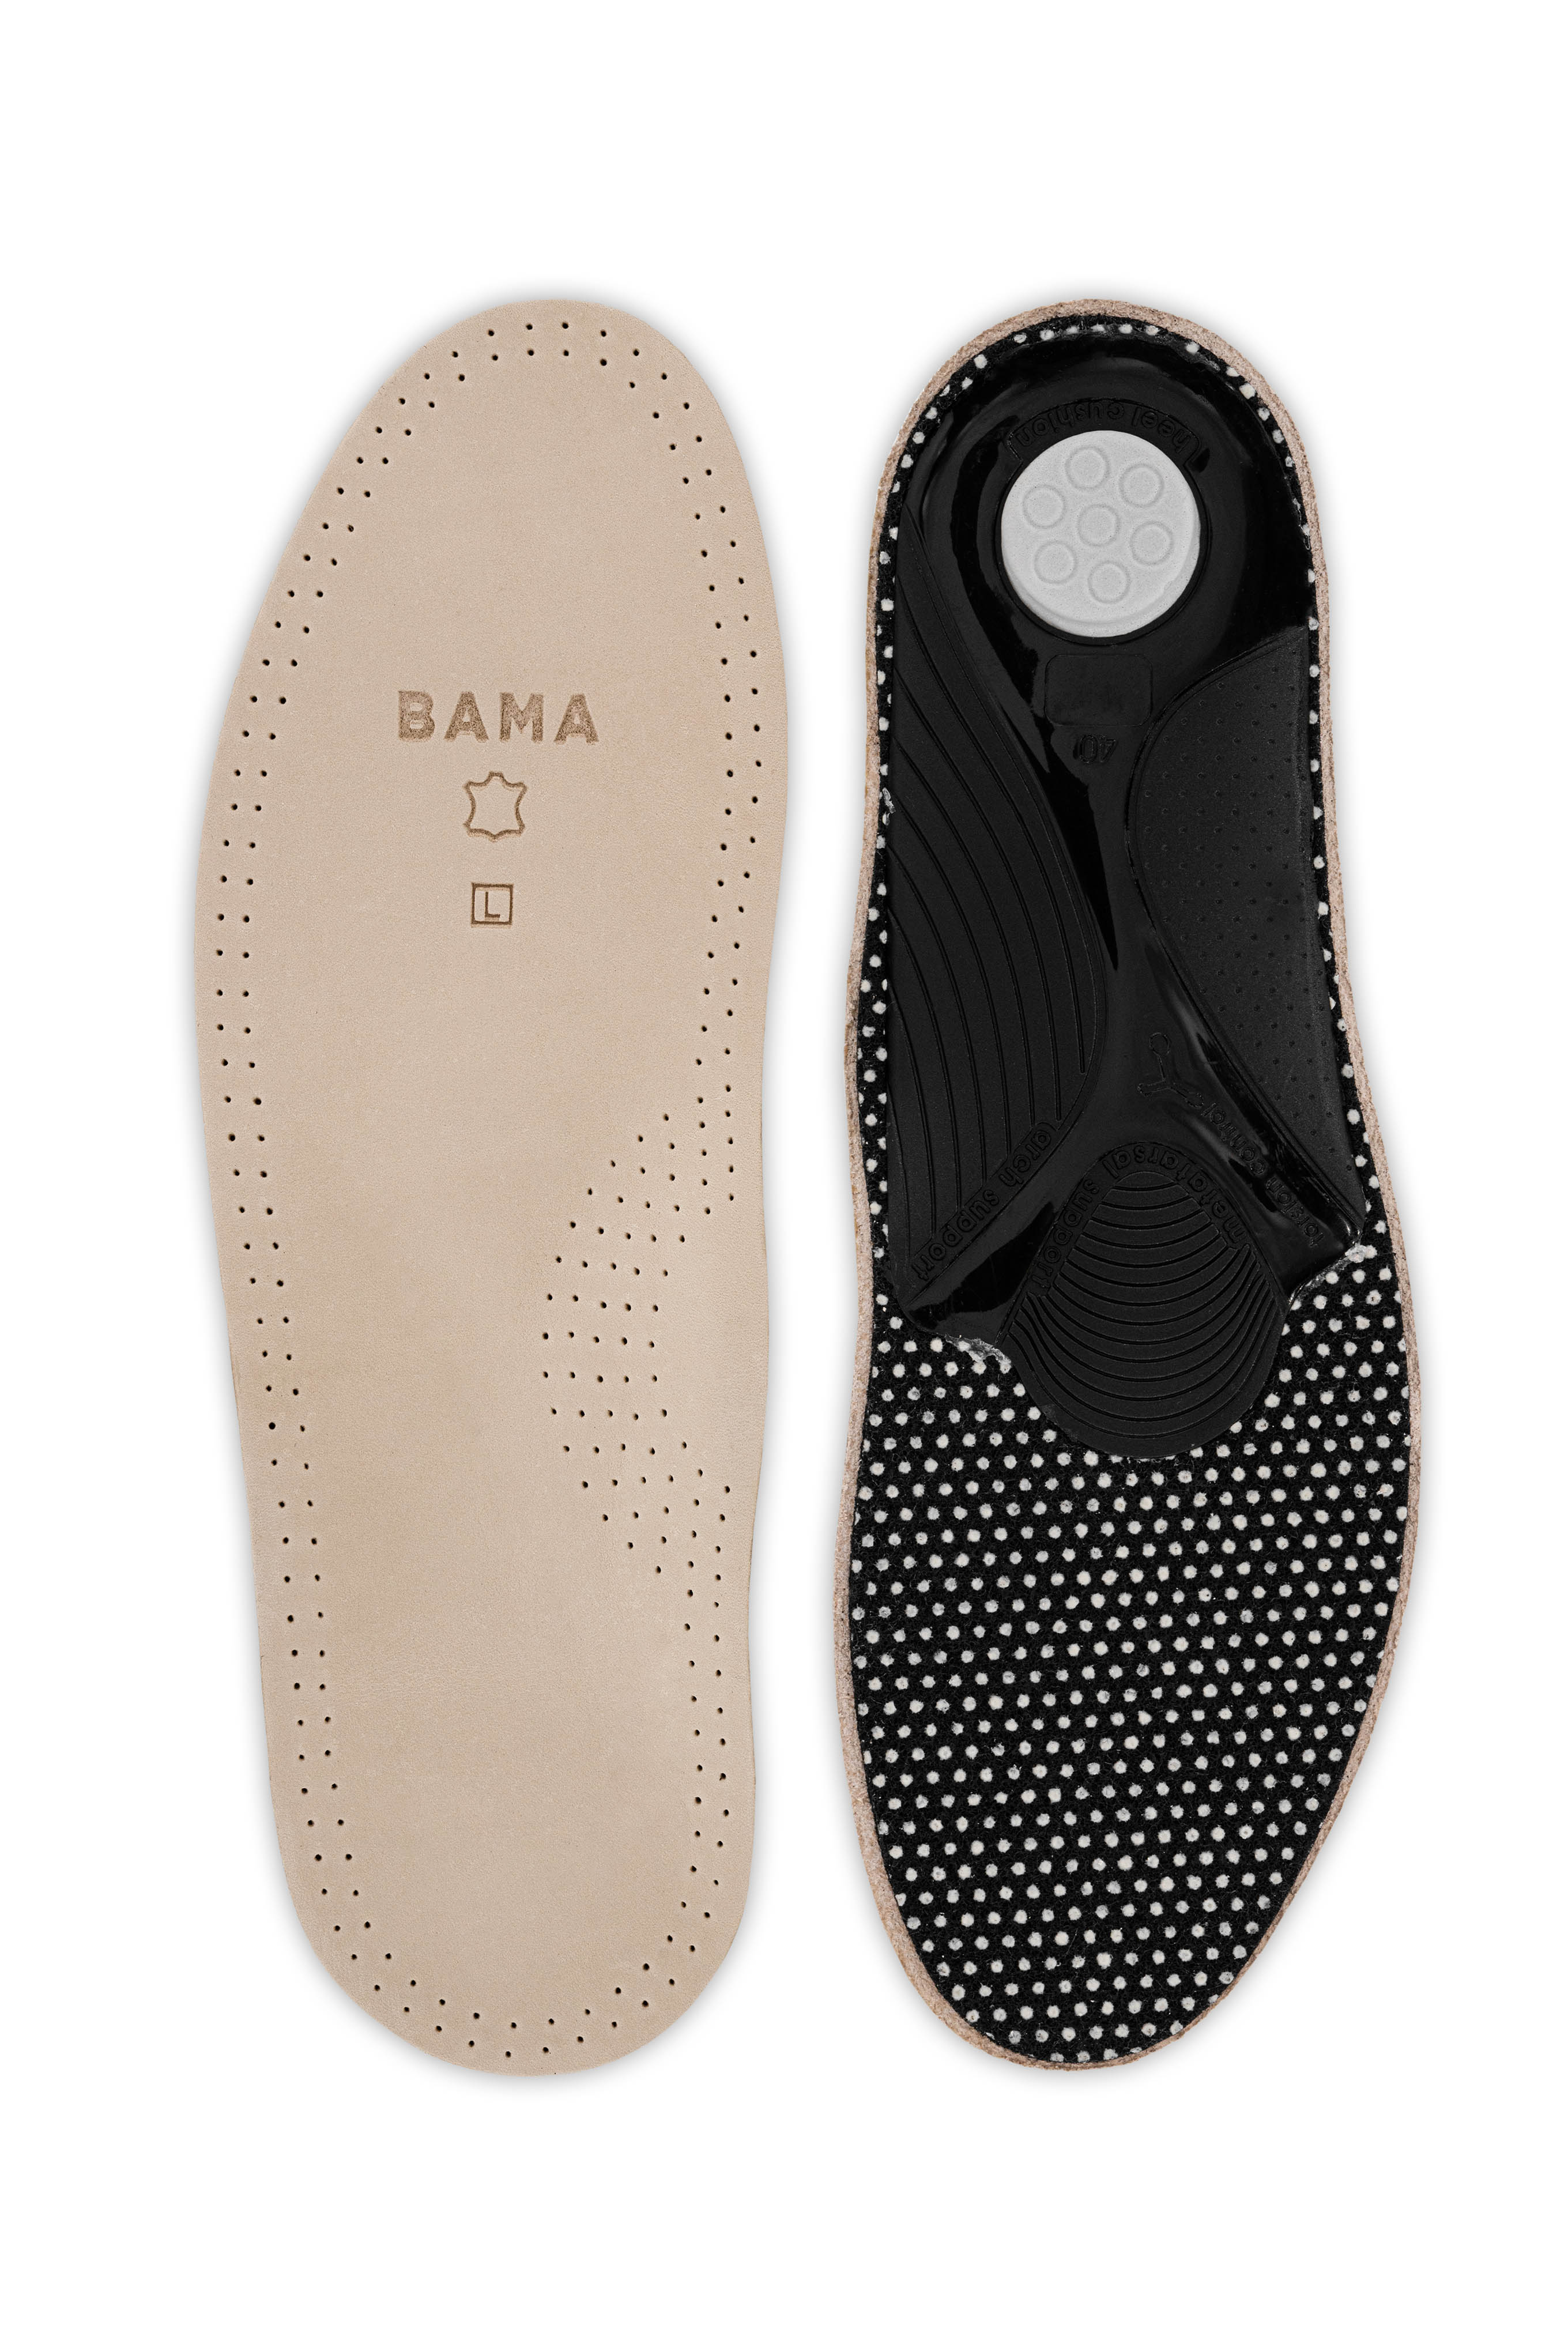 BAMA Premium Leather Footped 44*